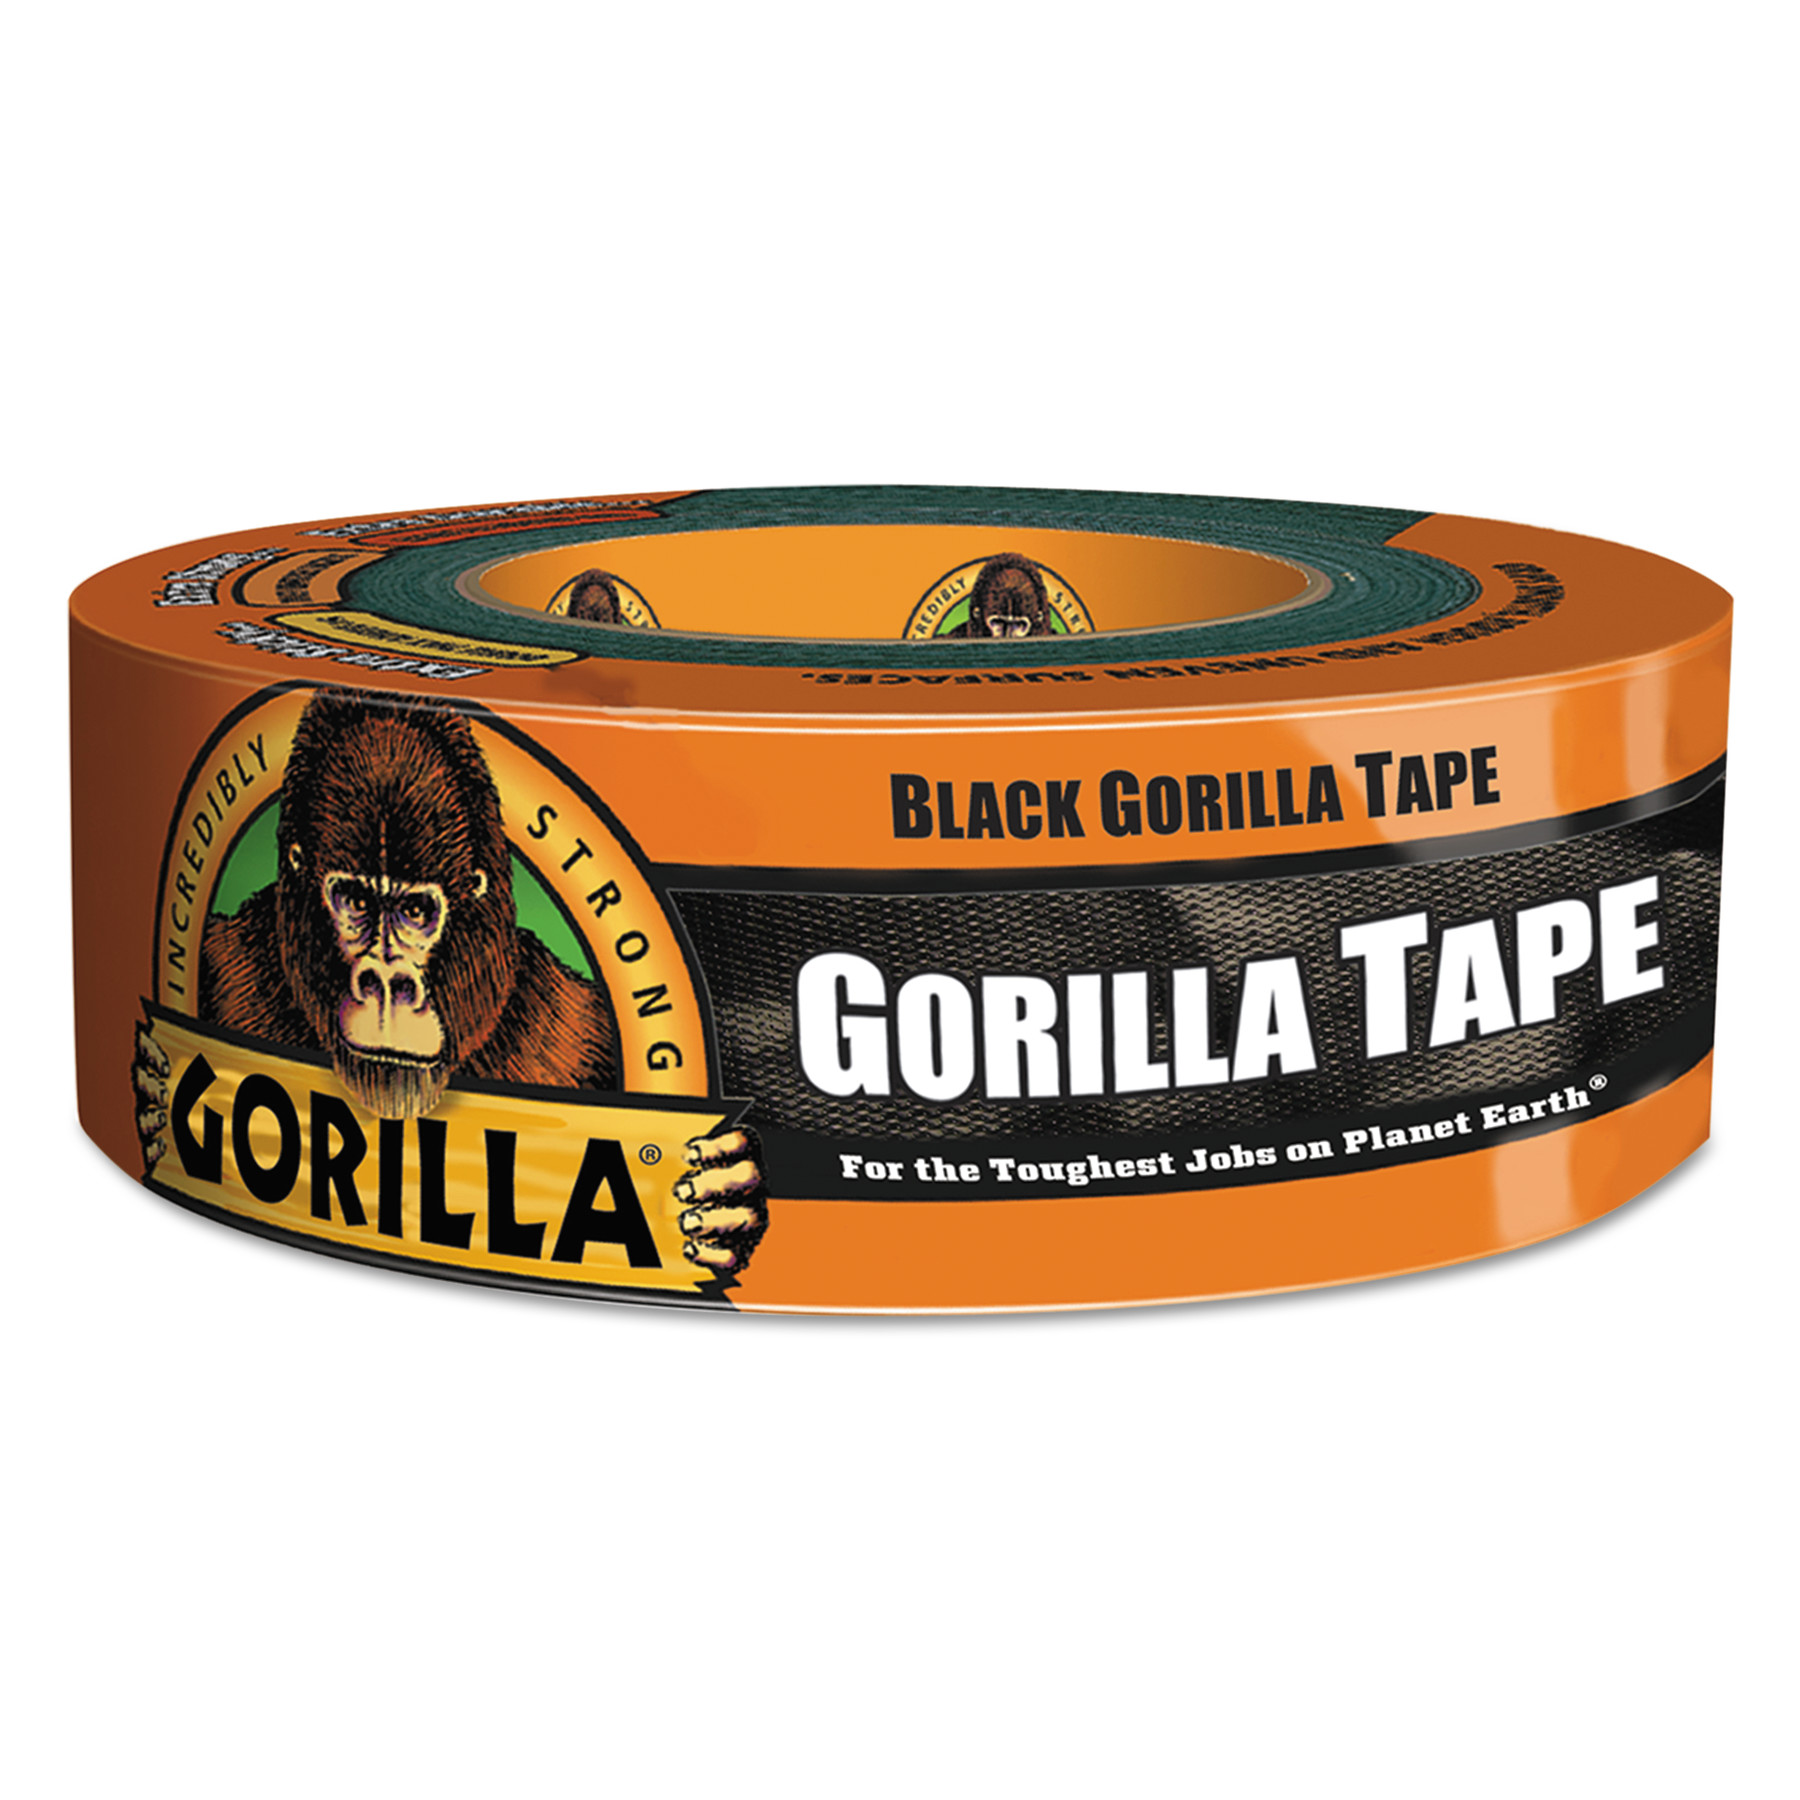 Gorilla Black Tape, 35 yd Roll - image 1 of 2